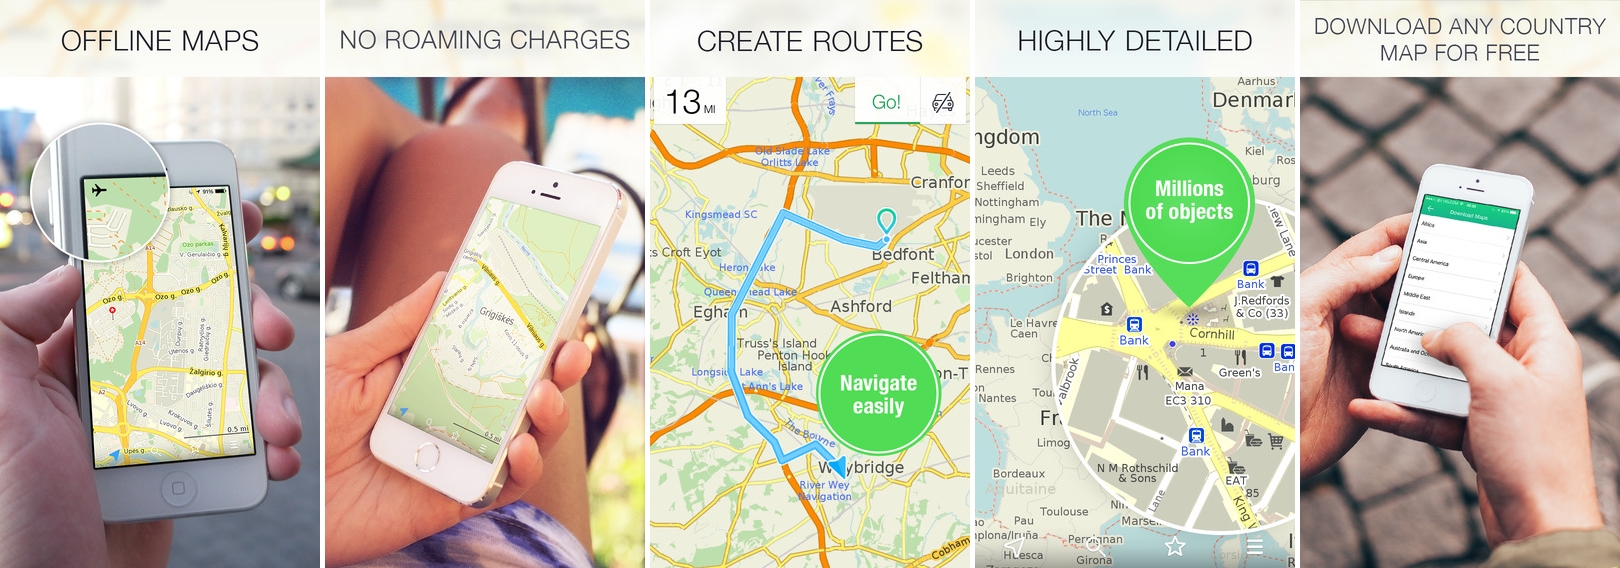 [App] Maps.me แอพแผนที่แบบออฟไลน์ ที่คนมีรถควรโหลดติดไว้ในเครื่อง